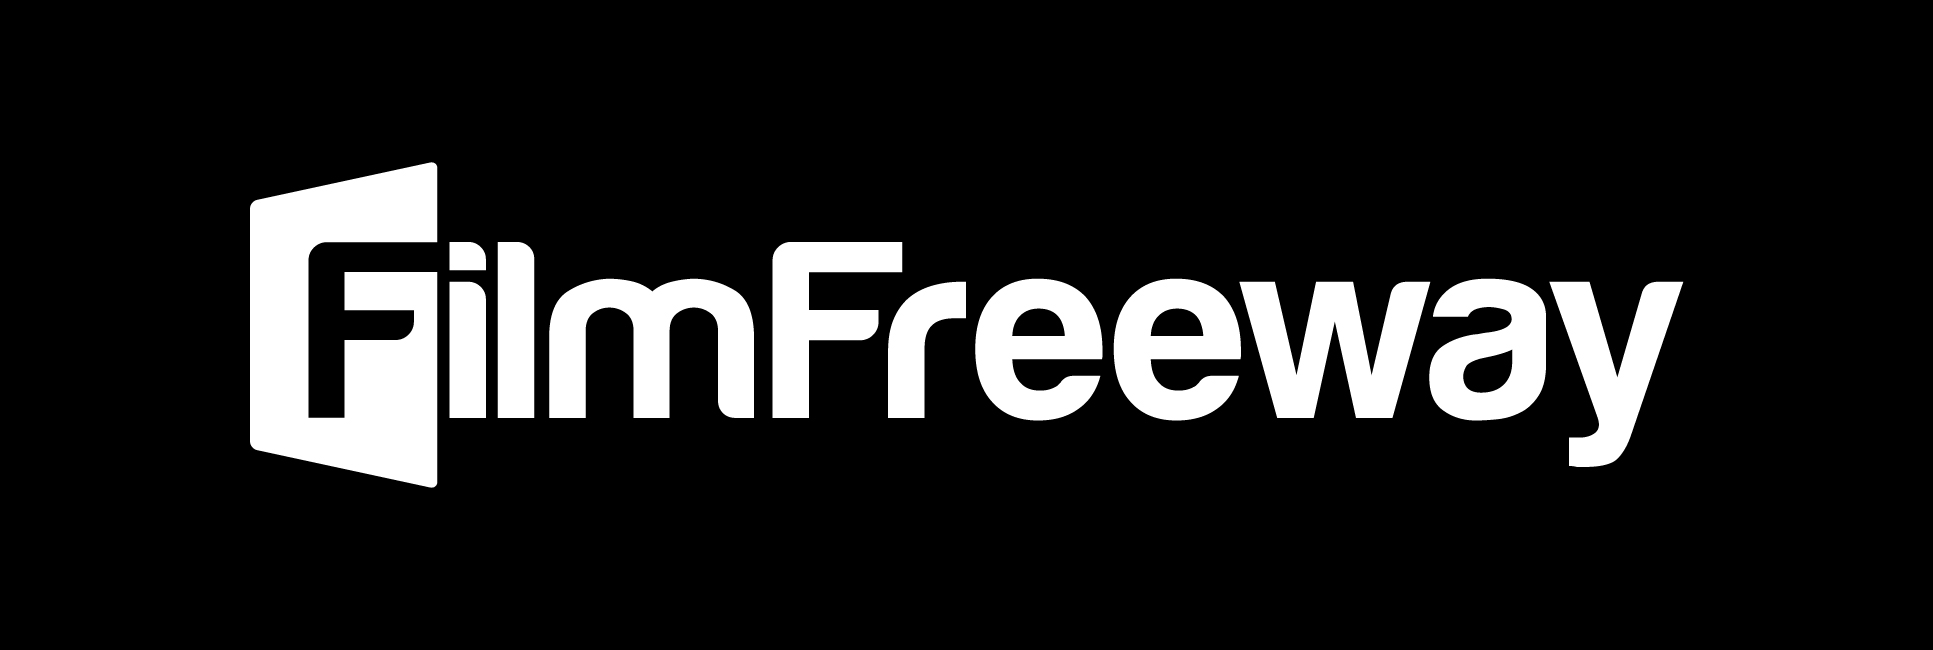 filmfreeway-logo-hires-white-c8807fee5ac1944d8ab2972e4774e9f1